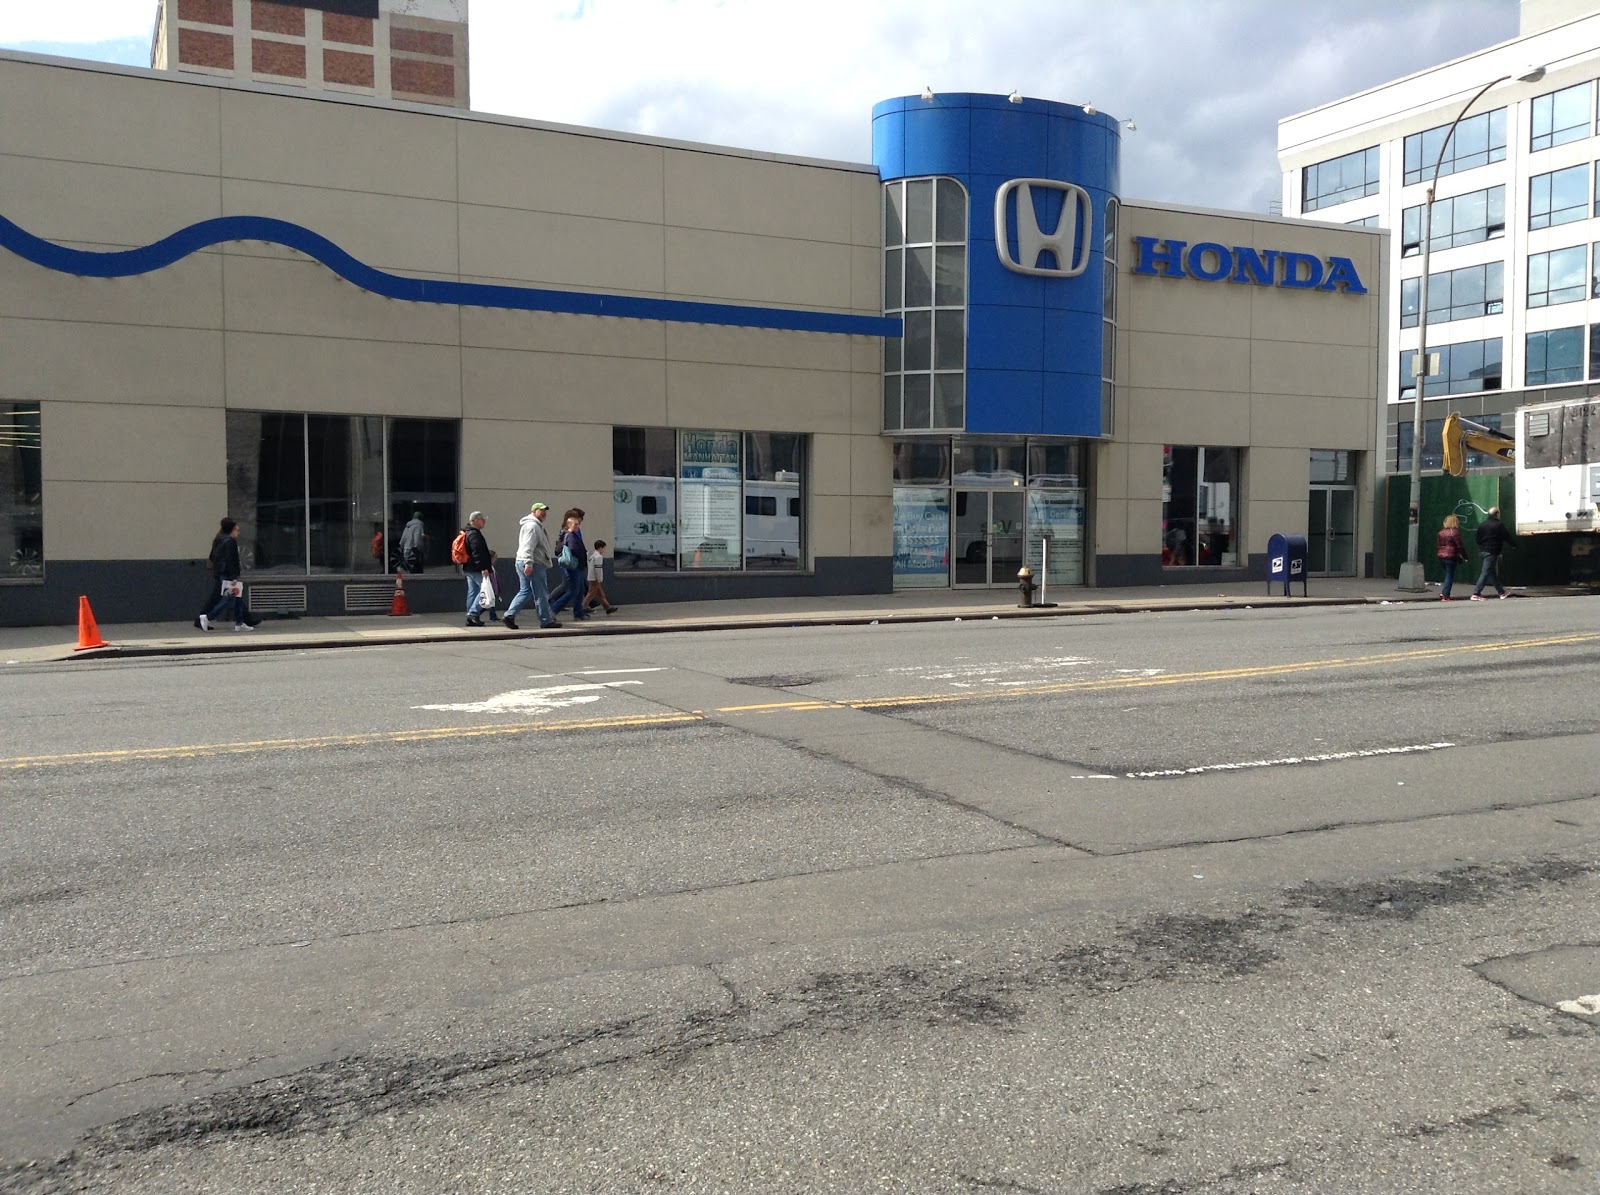 Photo of Honda Manhattan in New York City, New York, United States - 1 Picture of Point of interest, Establishment, Car dealer, Store